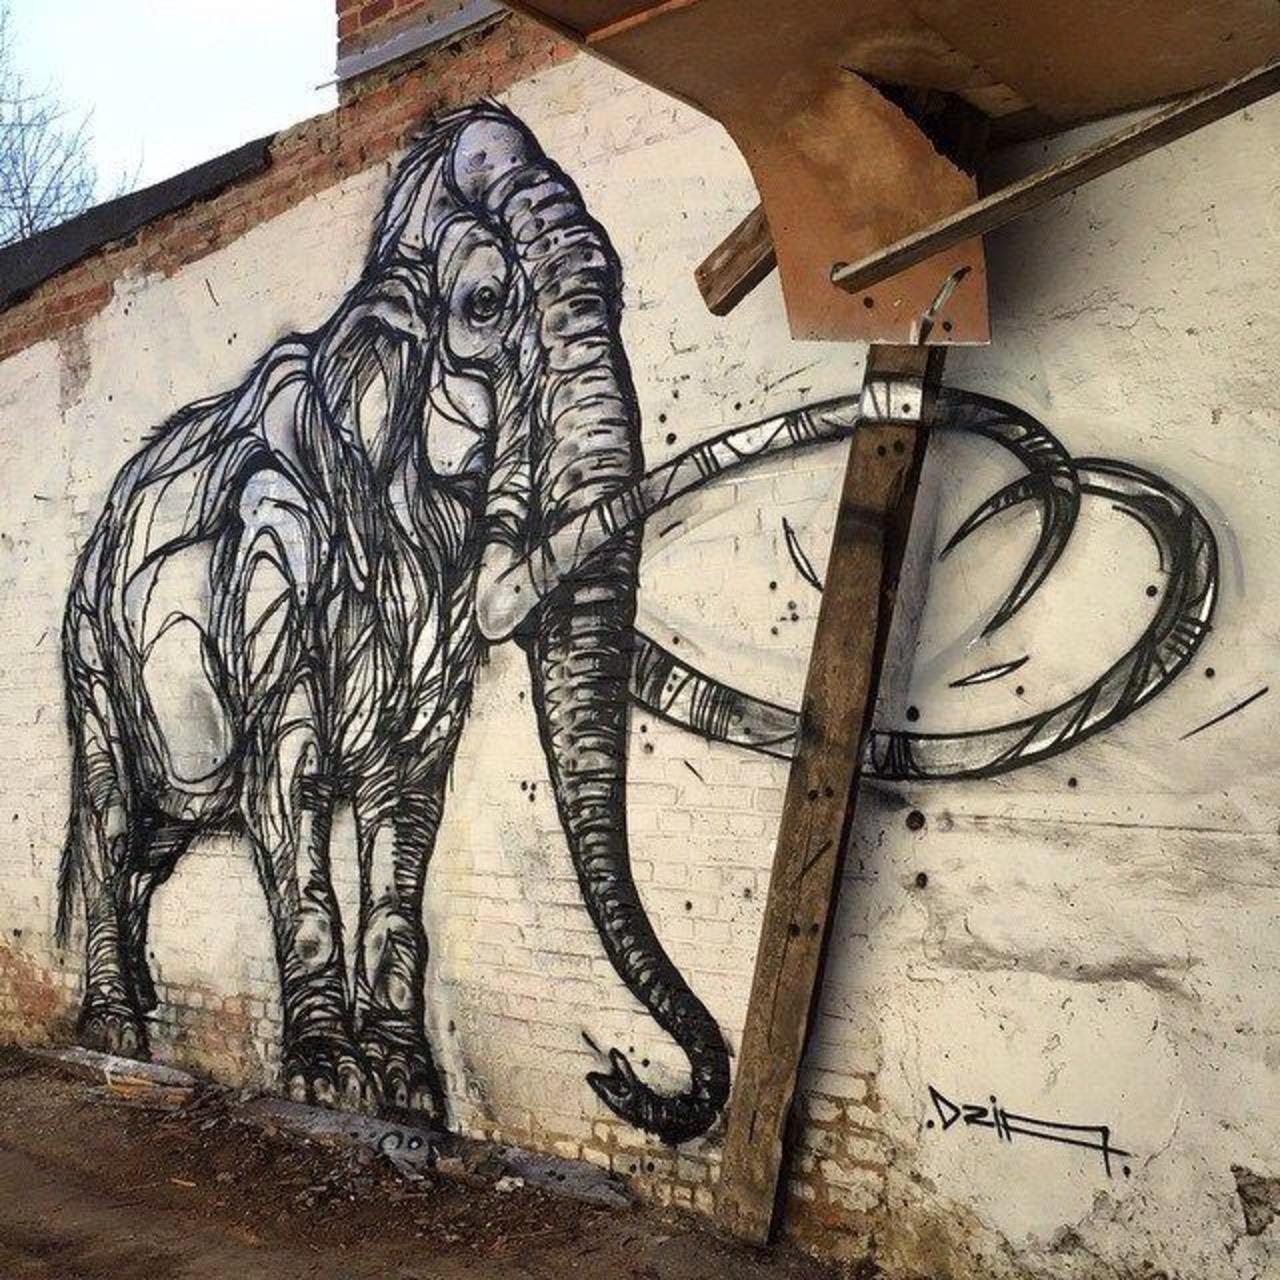 Mammoth. New nature in Street Art wall by DZIA 

#art #graffiti #mural #streetart http://t.co/lv5DtMPkbD